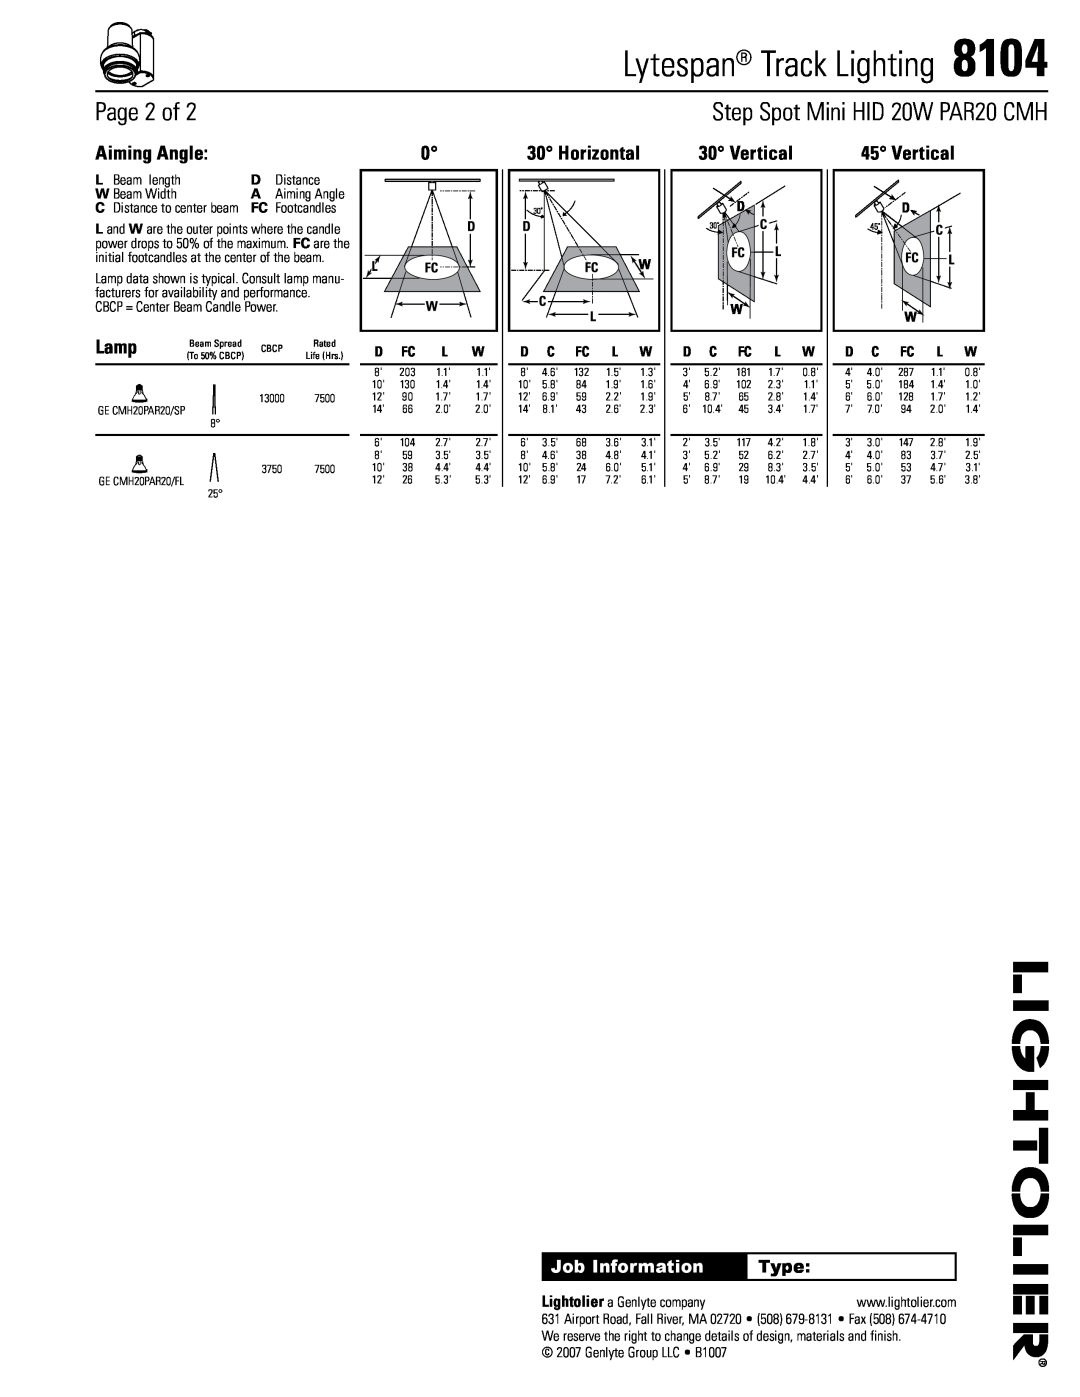 Lightolier 8104 Page of, Aiming Angle, Horizontal, Vertical, Lytespan Track Lighting , Step Spot Mini HID 20W PAR20 CMH 